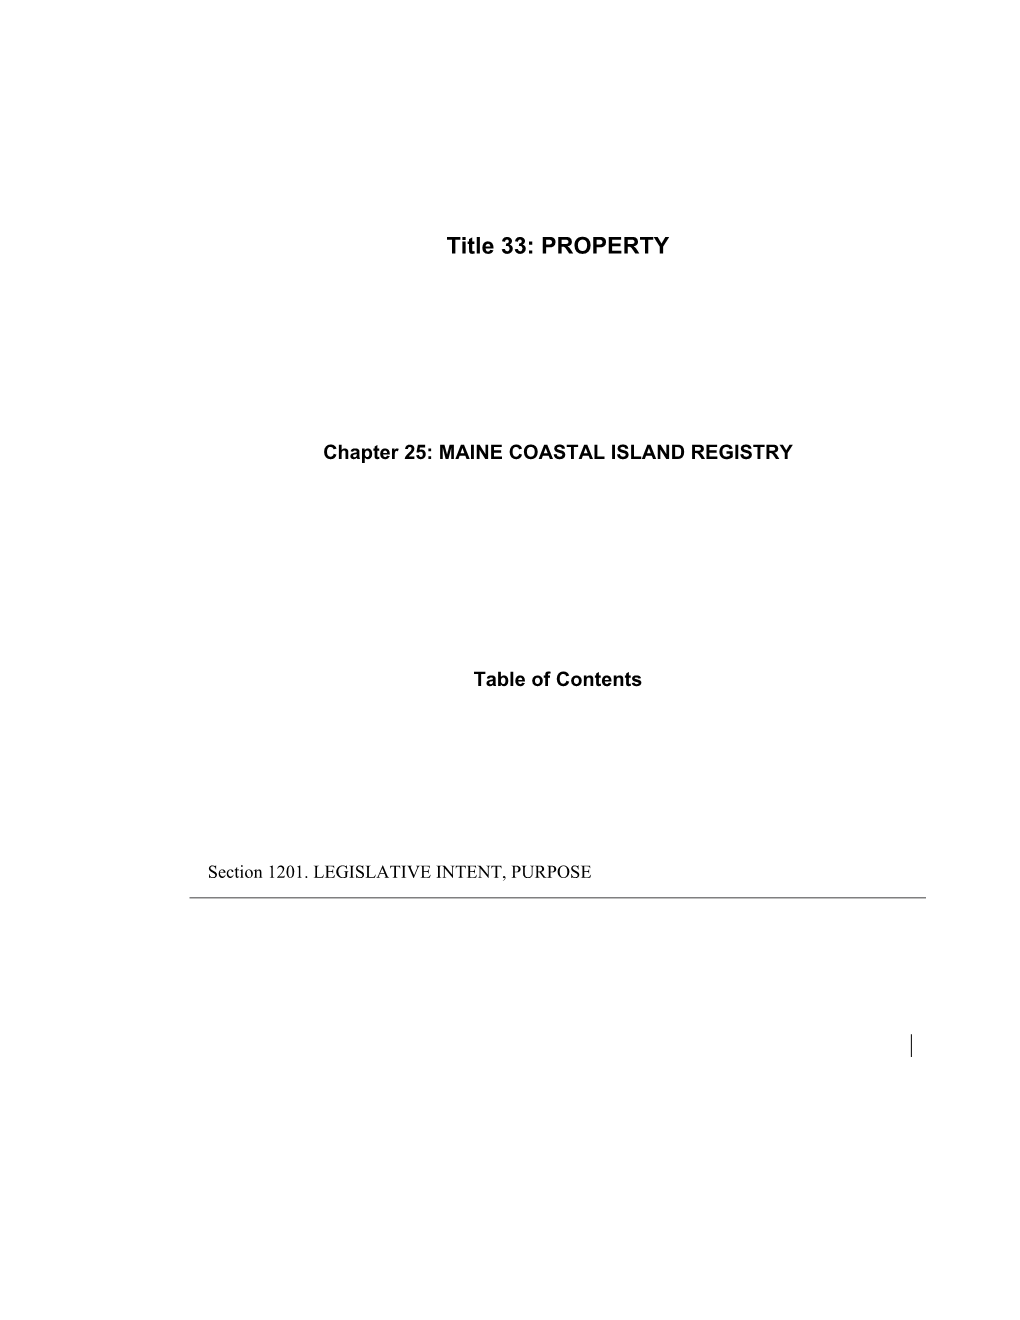 MRS Title 33, Chapter25: MAINE COASTAL ISLAND REGISTRY